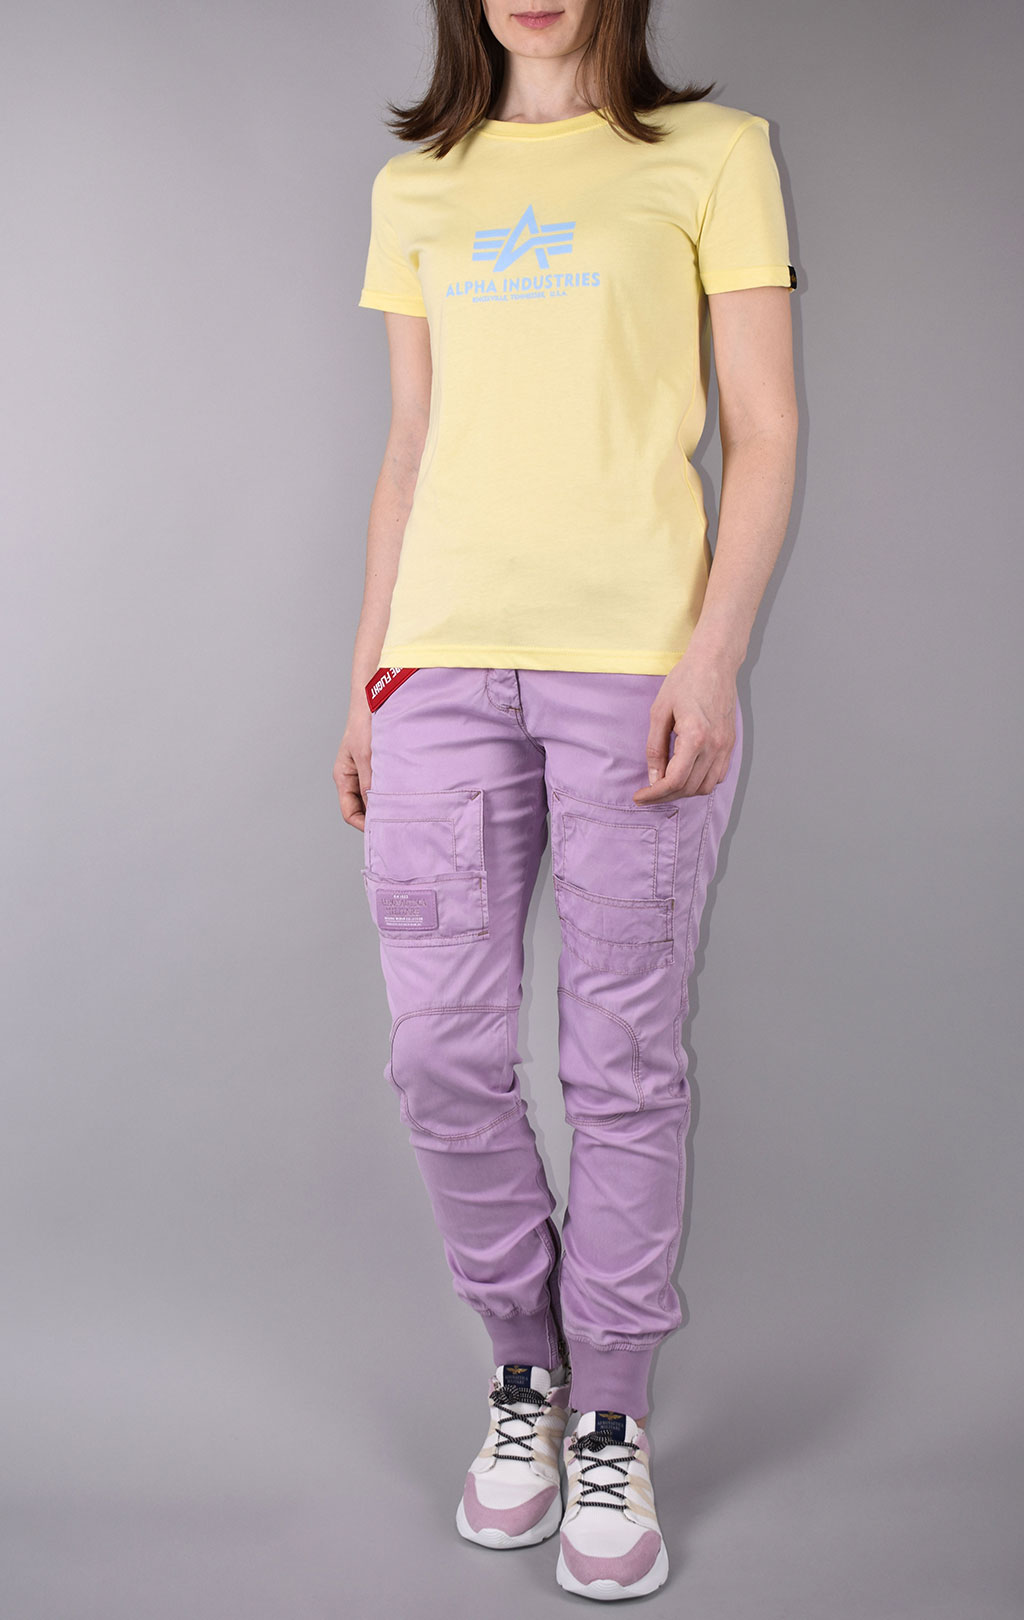 Женская футболка ALPHA INDUSTRIES NEW BASIC T pastel yellow 